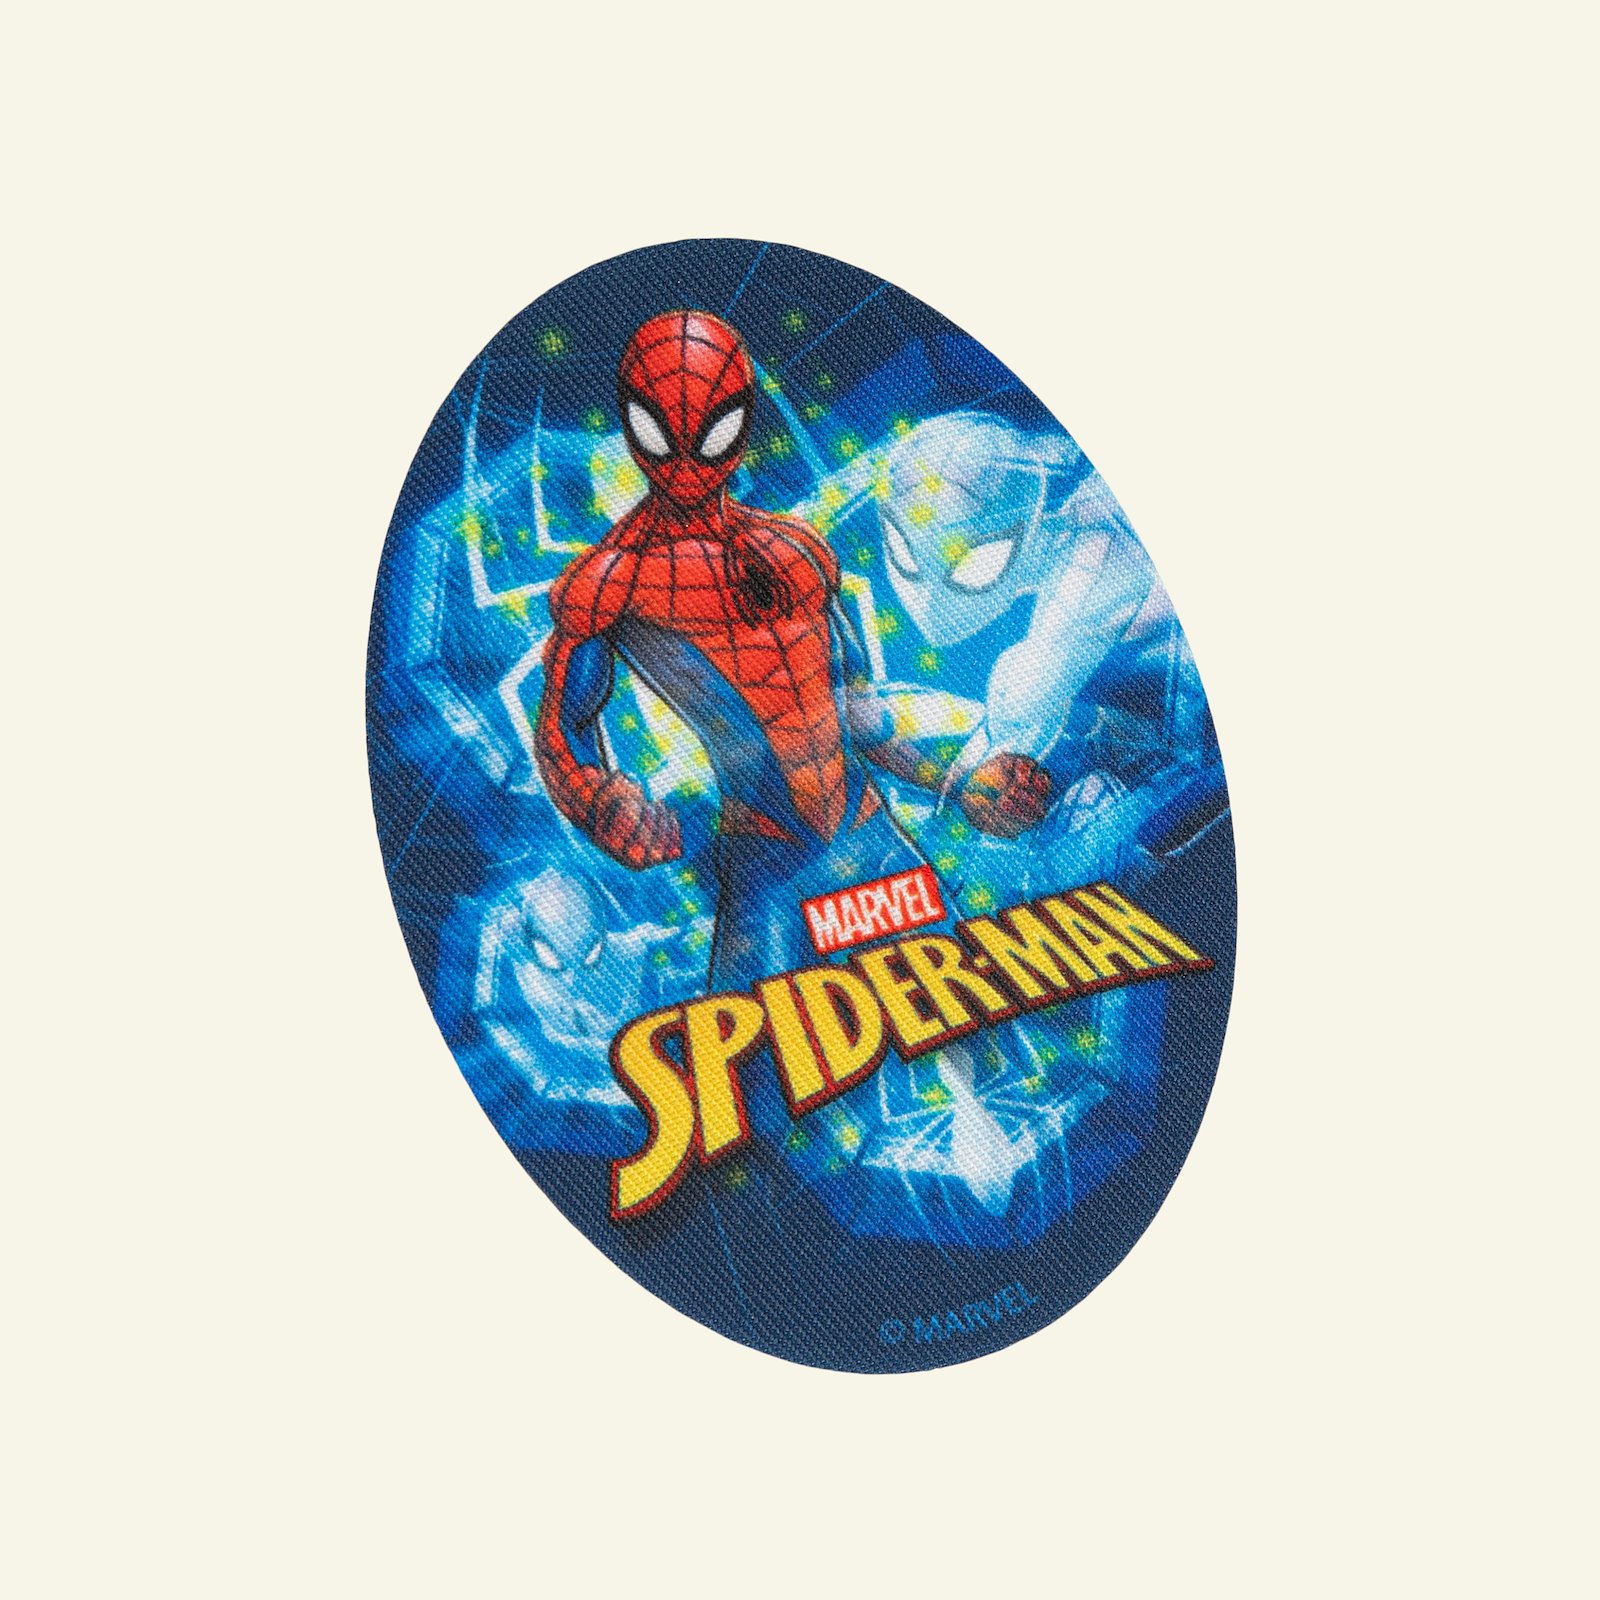 Patch Spiderman 110x80mm blue/red 1pcs | Selfmade® (Stoff & Stil)